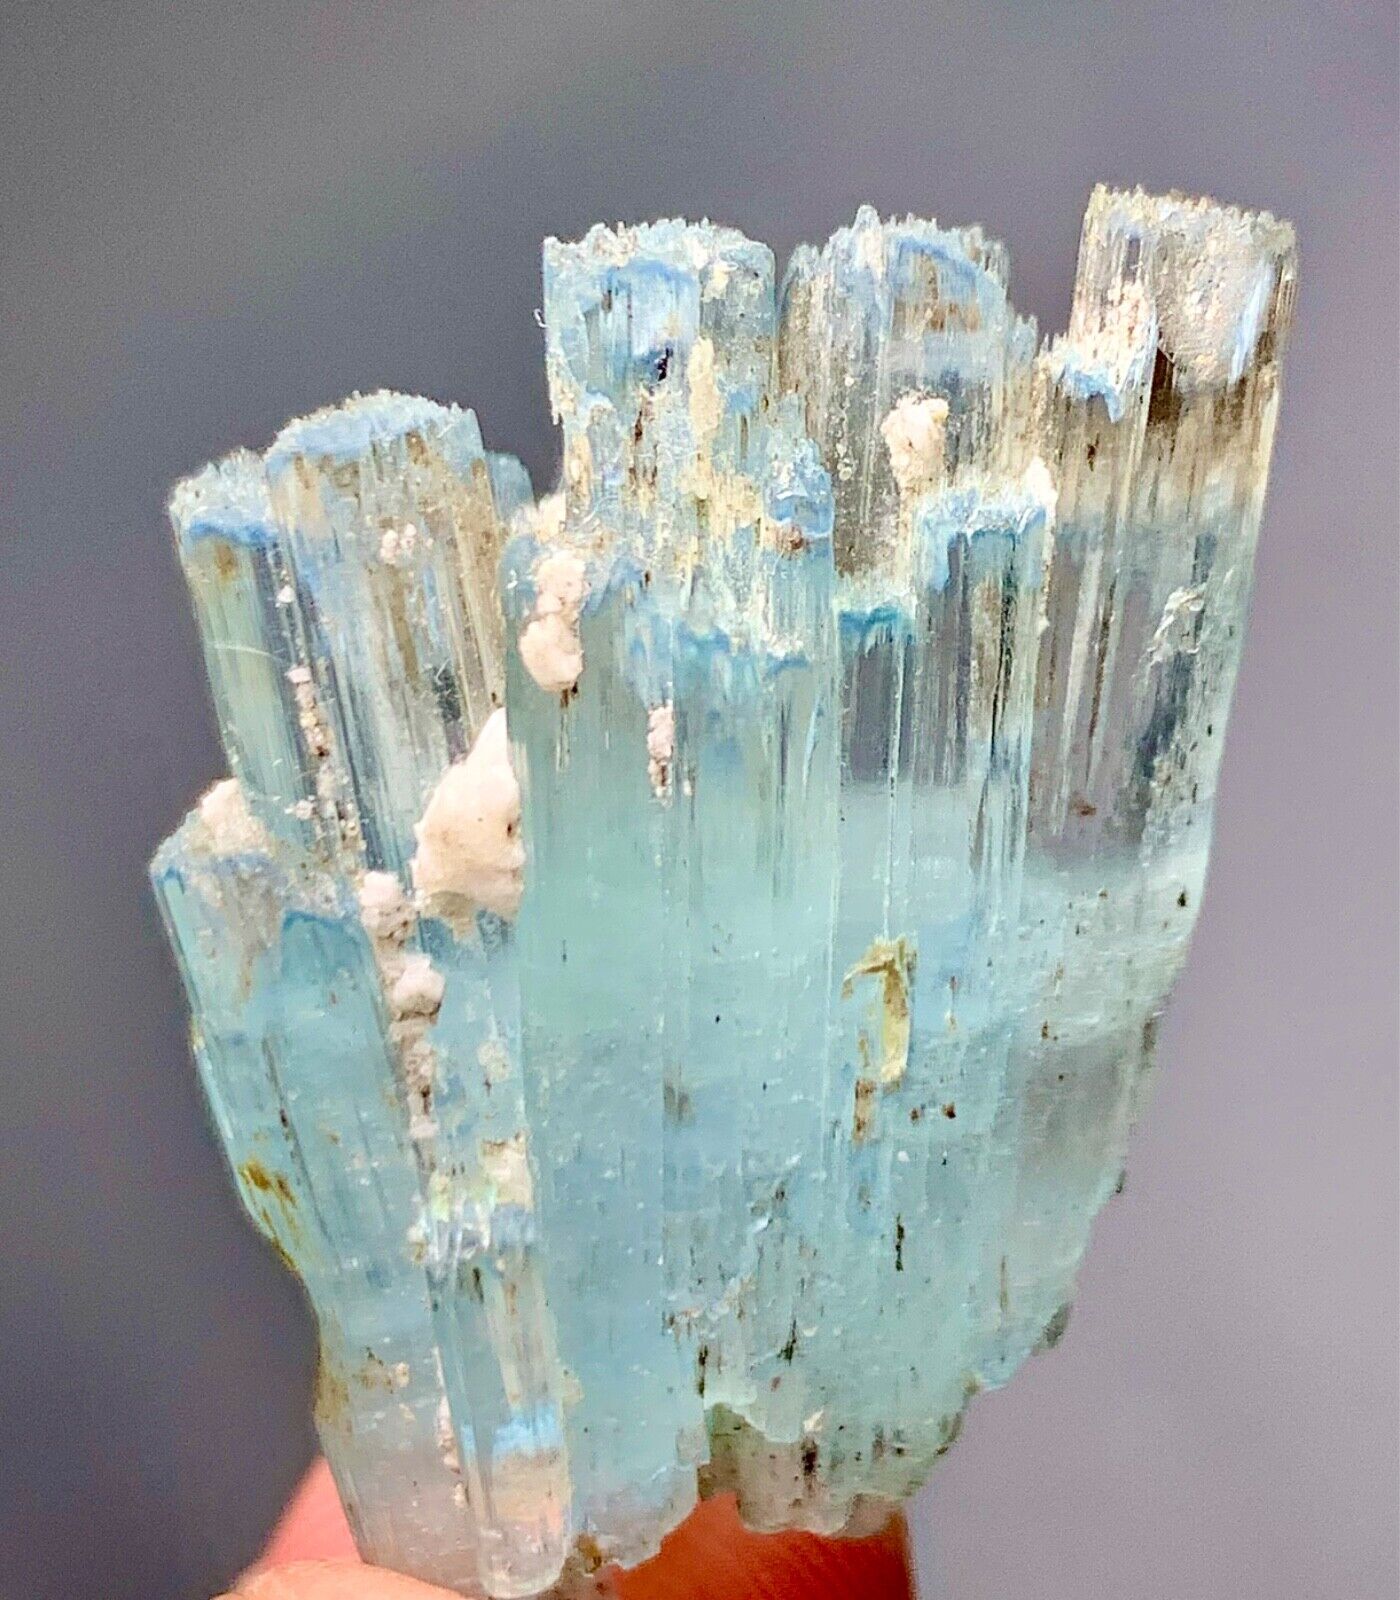 47 Carat Rare Etched Natural Aquamarine Crystal Specimen From Skardu Pakistan